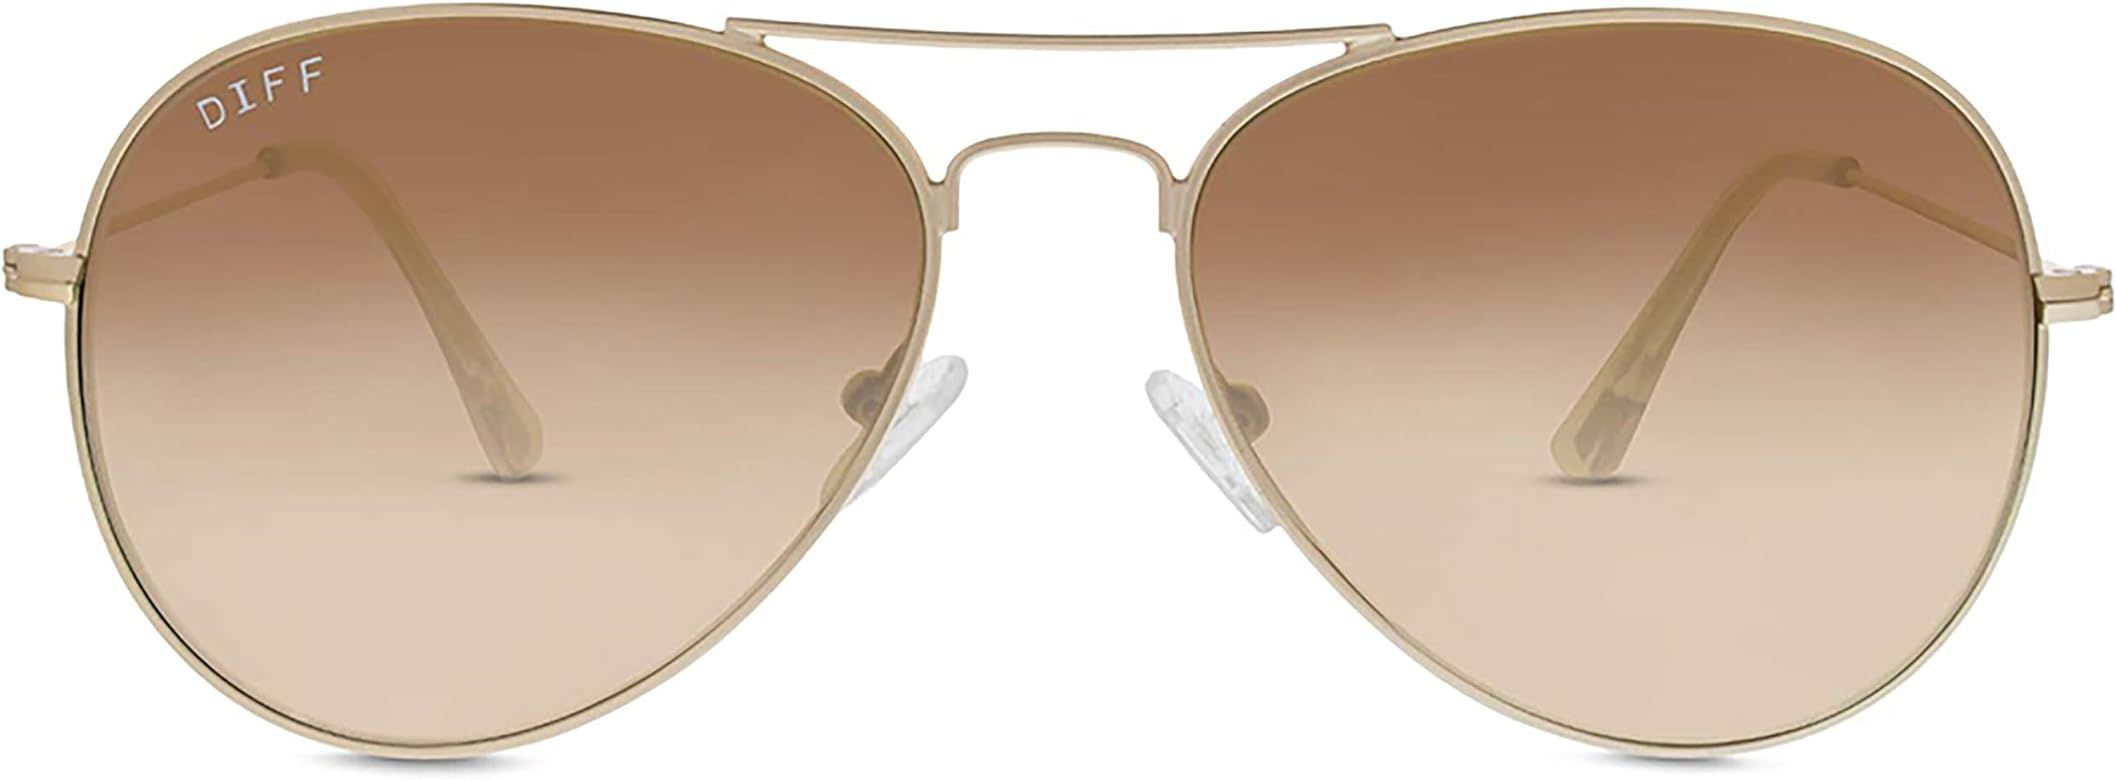 Eyewear - Cruz - Designer Aviator Sunglasses for Men & Women - 100% UVA/UVB [Polarized] | Amazon (US)